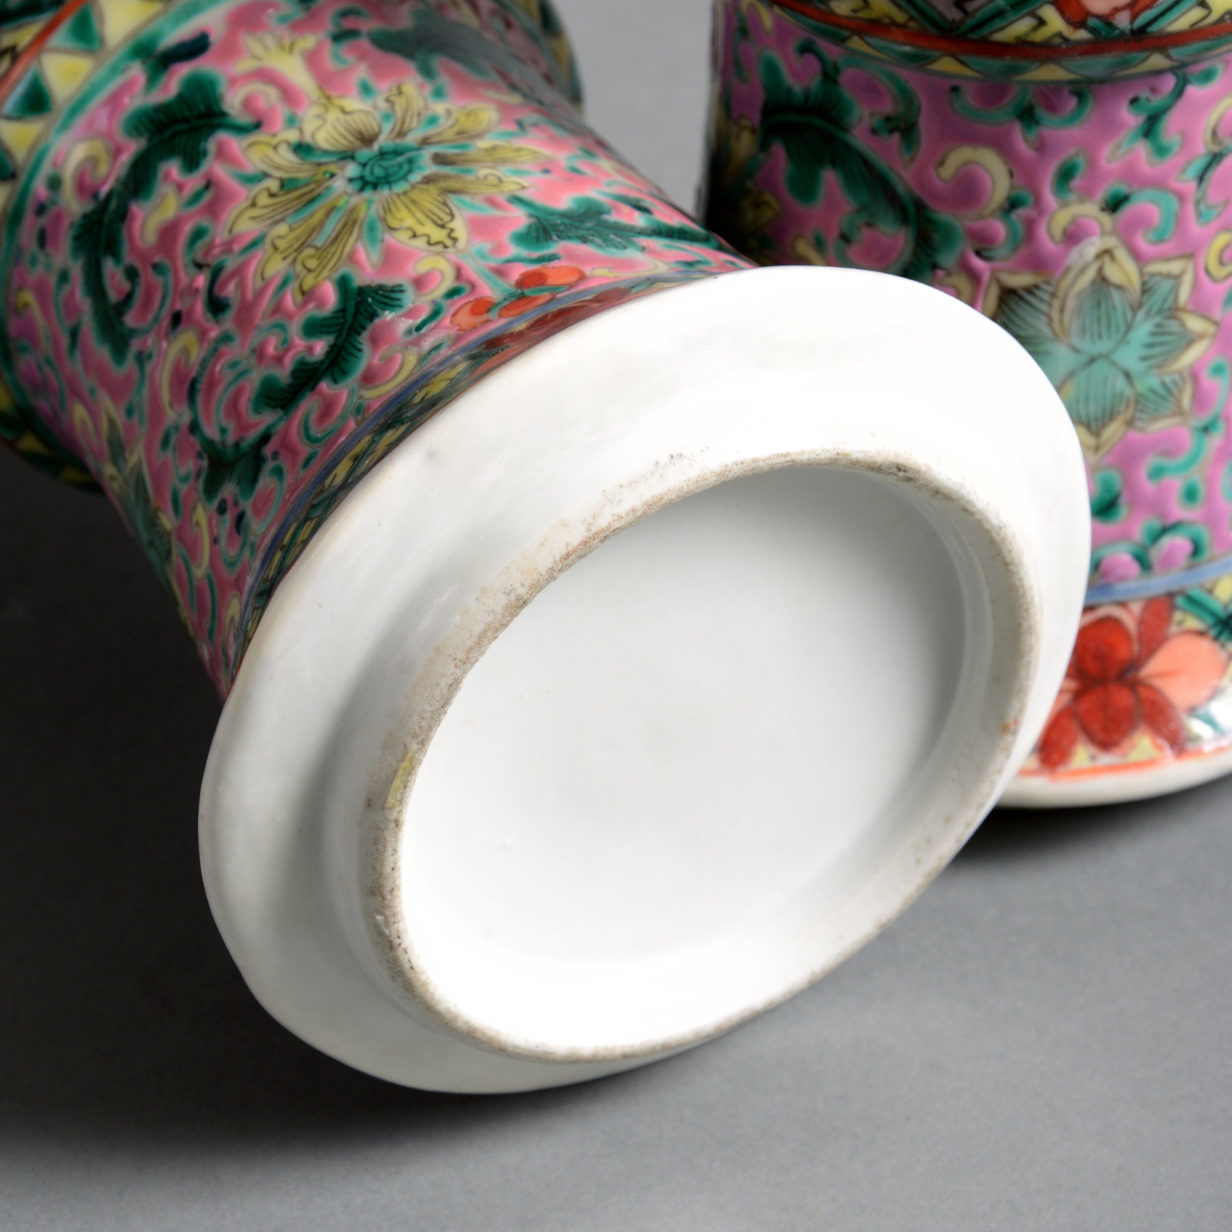 A pair of 19th century qing dynasty famille rose porcelain beaker vases